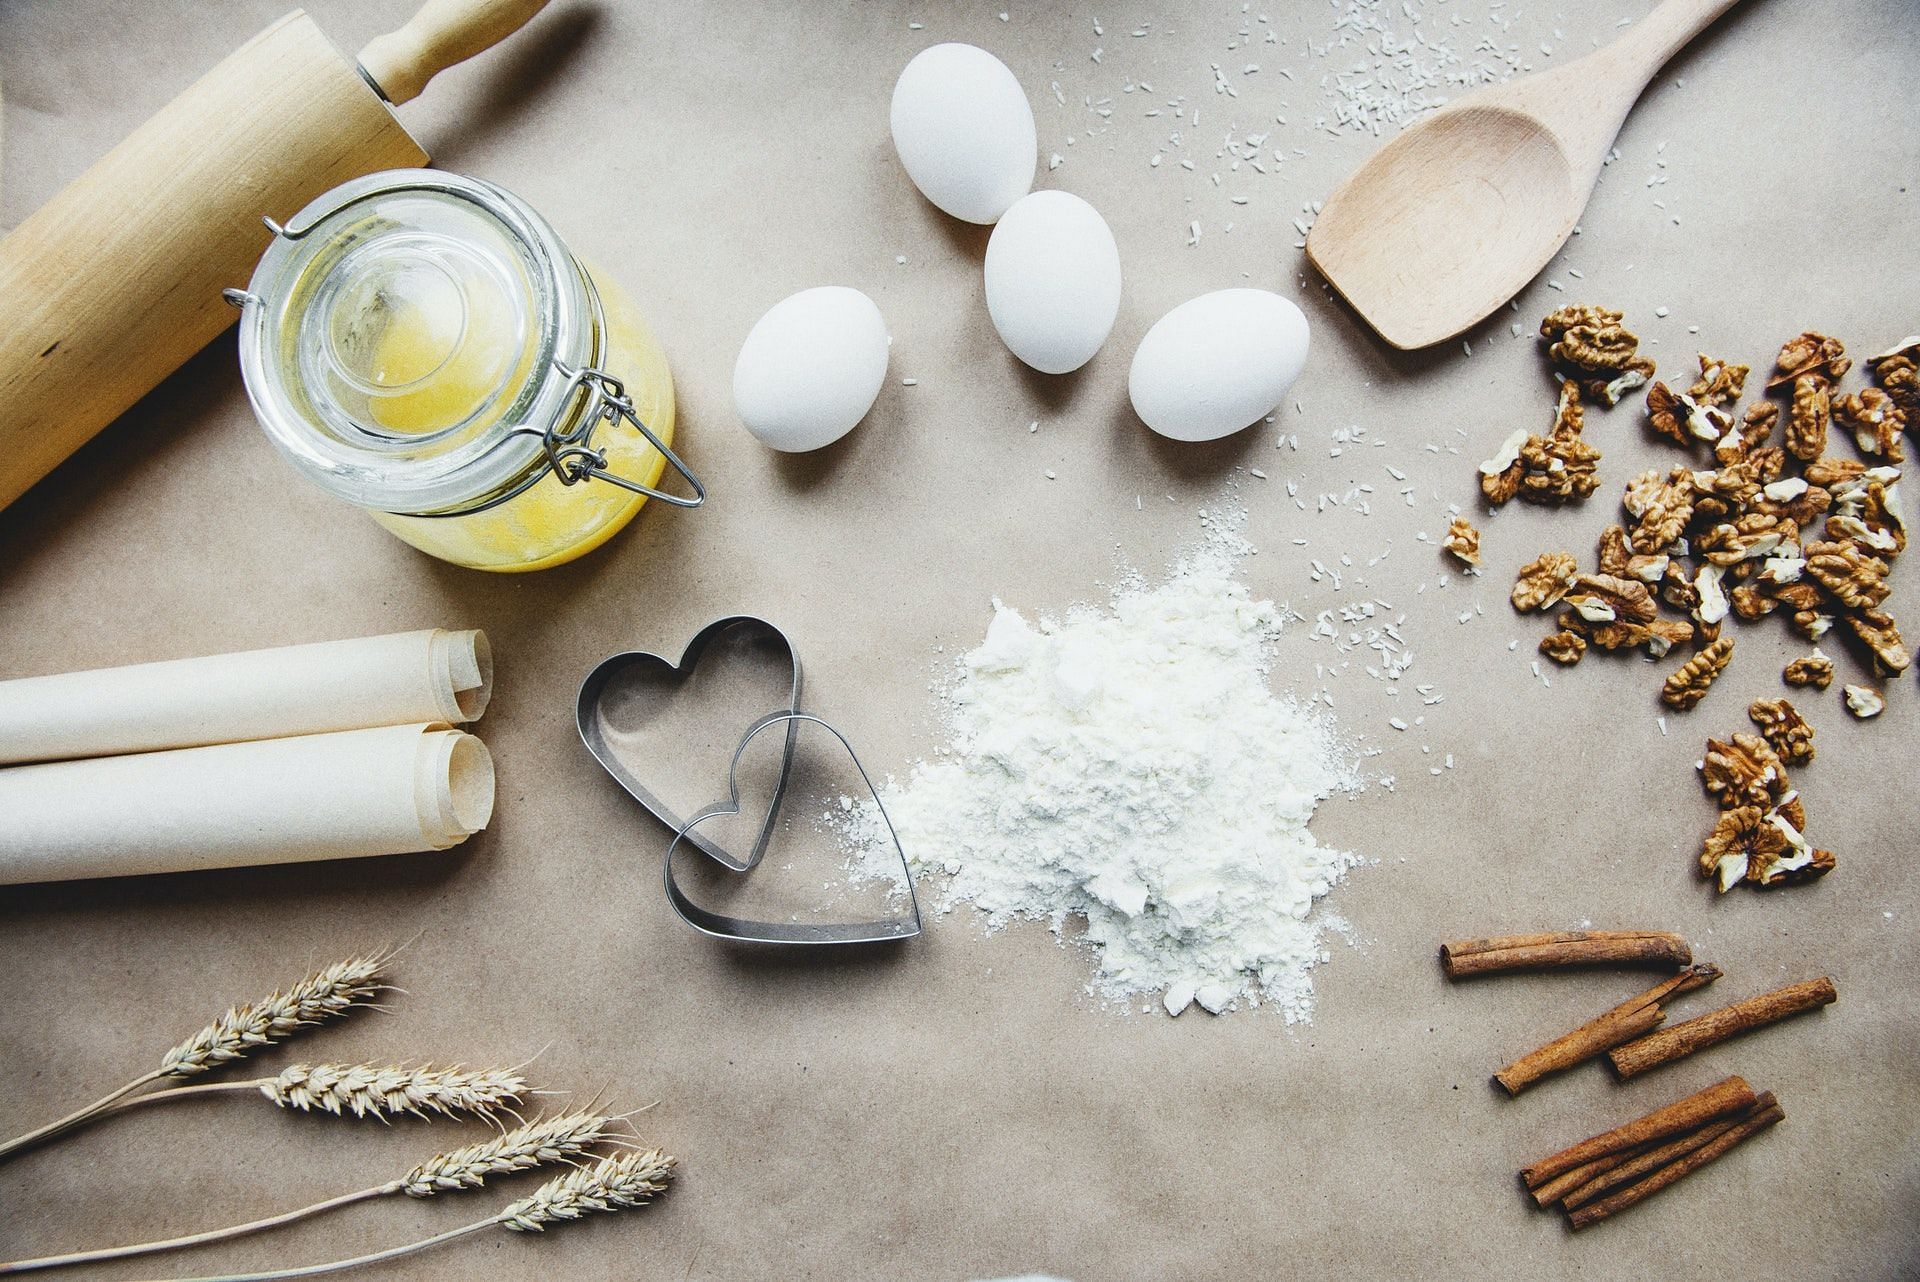 Spelt flour offers some amazing health benefits. (Photo by Ksenia Chernaya via pexels)